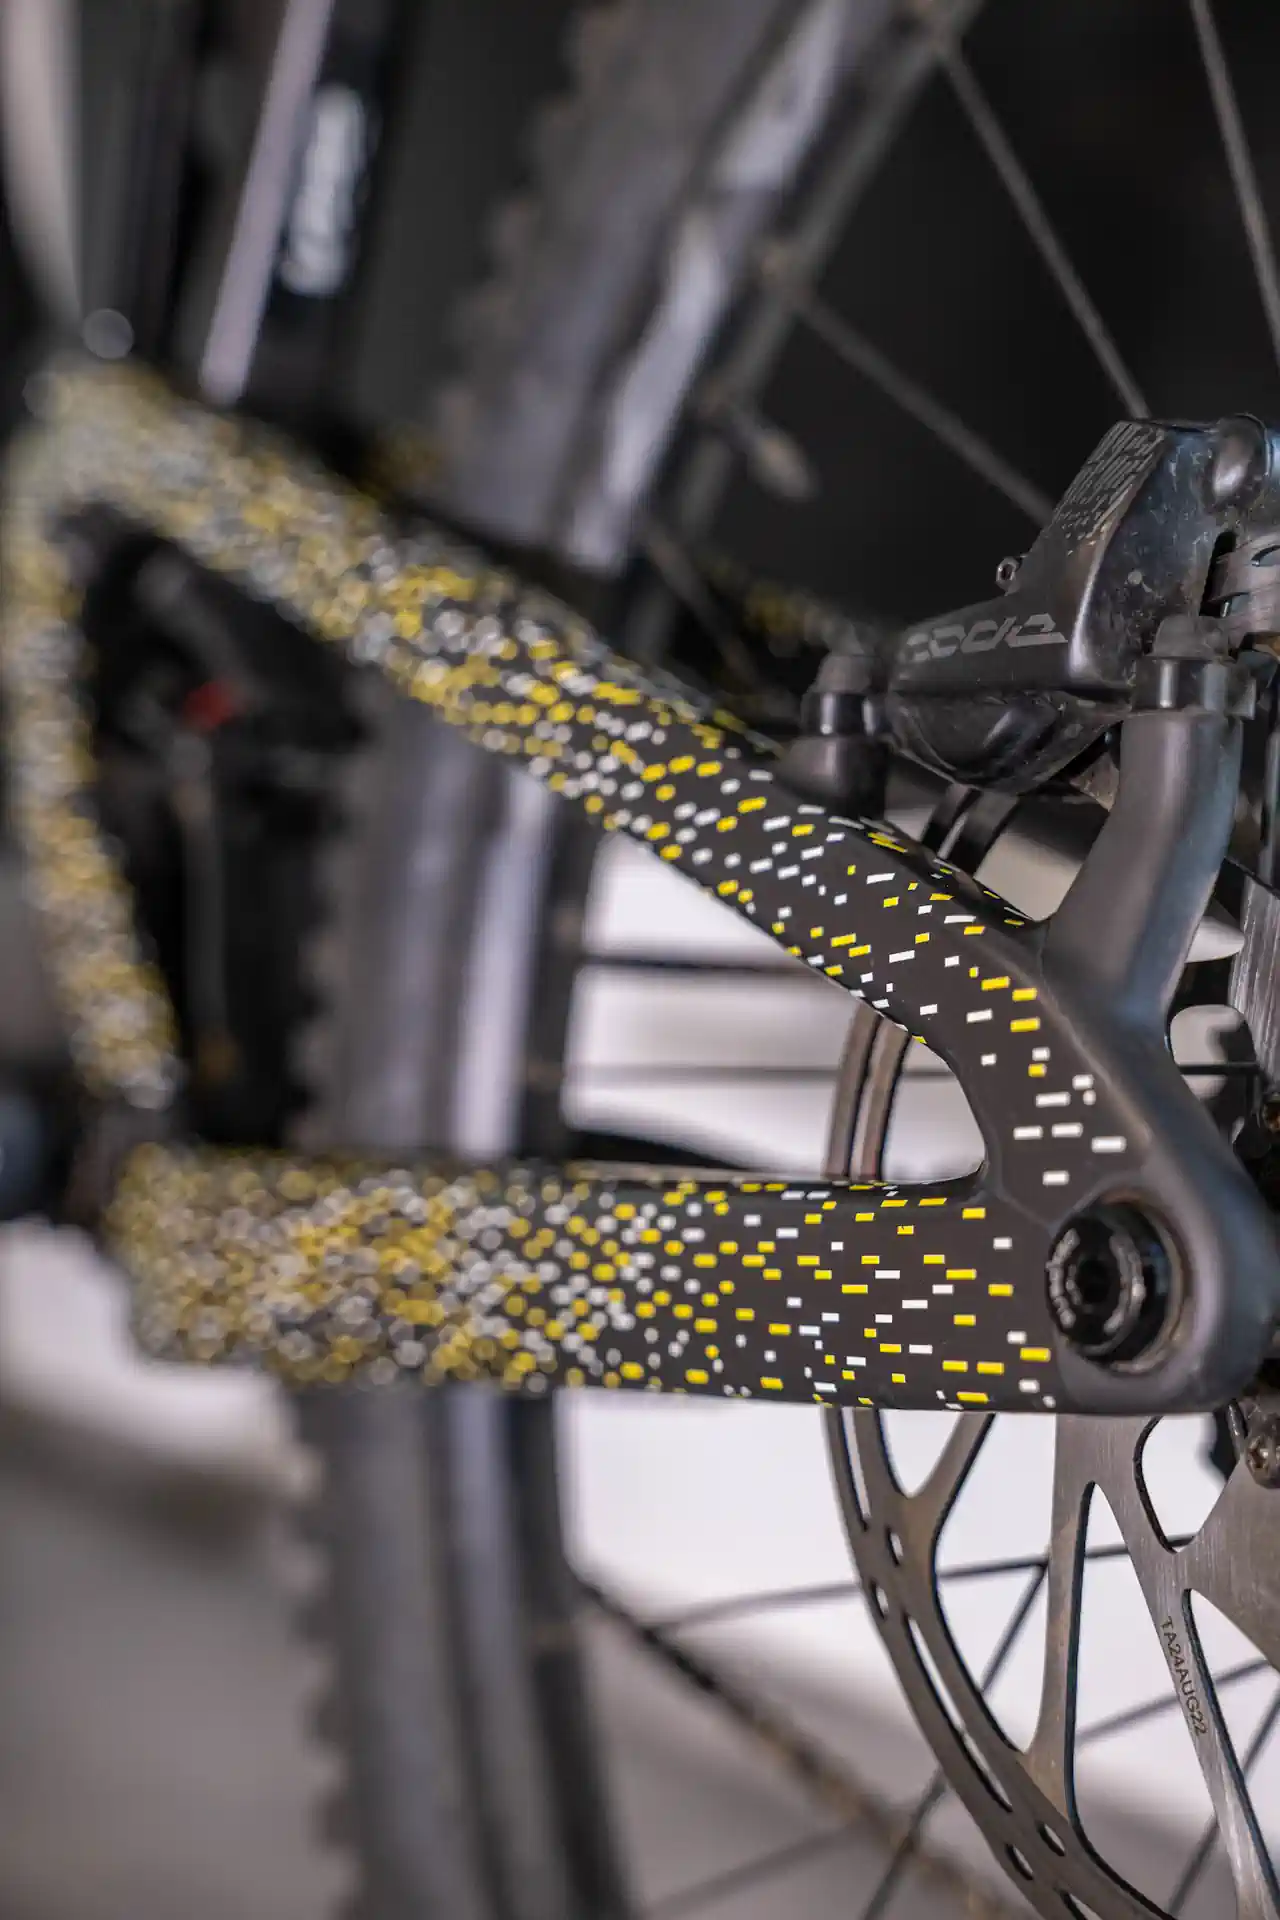 Zbliżenie na żółto-białe wzory folii ochronnej na dolnej ramie roweru